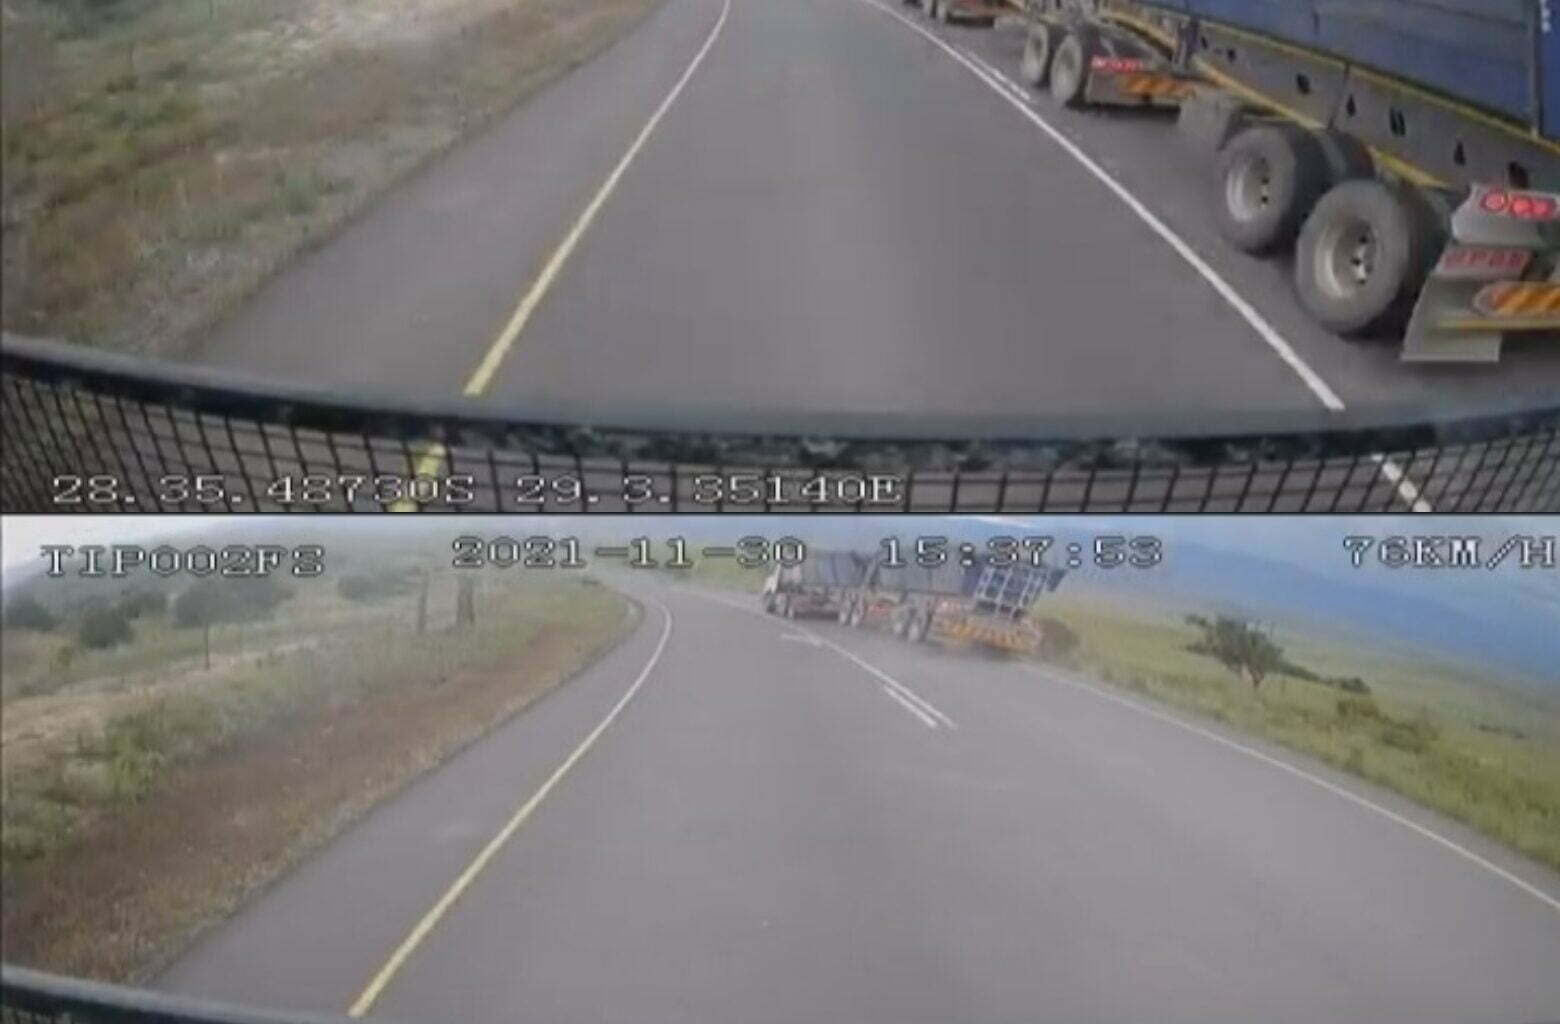 Overtaking side tipper truck caught crashing on dashcam